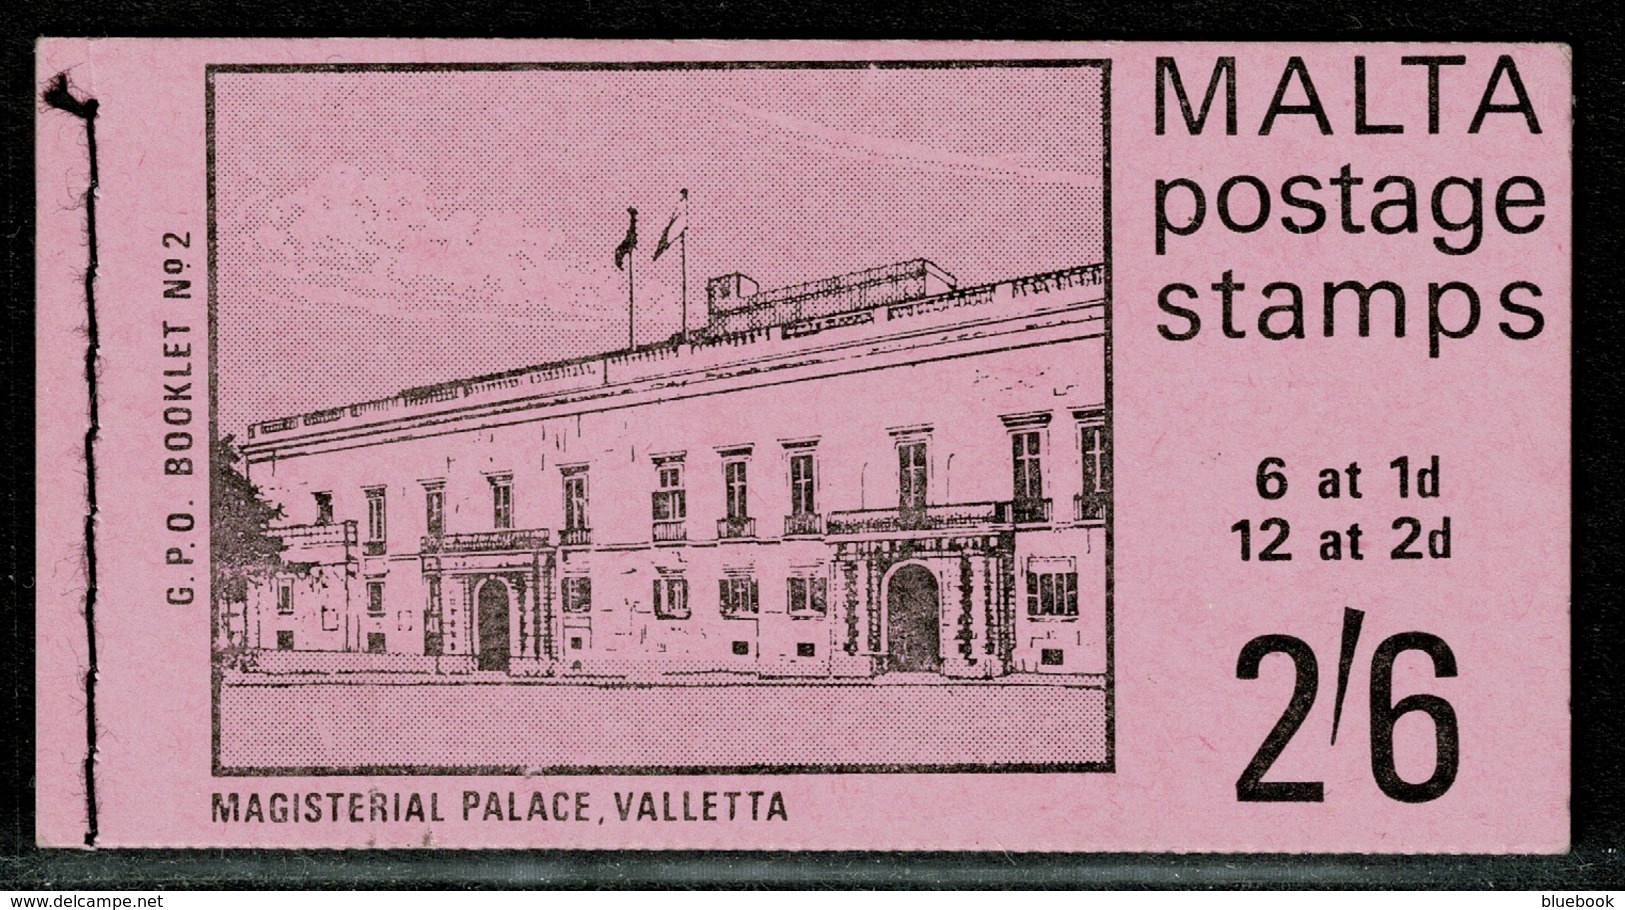 Ref 1237 - Malta 1970 2/6 Stamp Booklet - SB2 - Malta